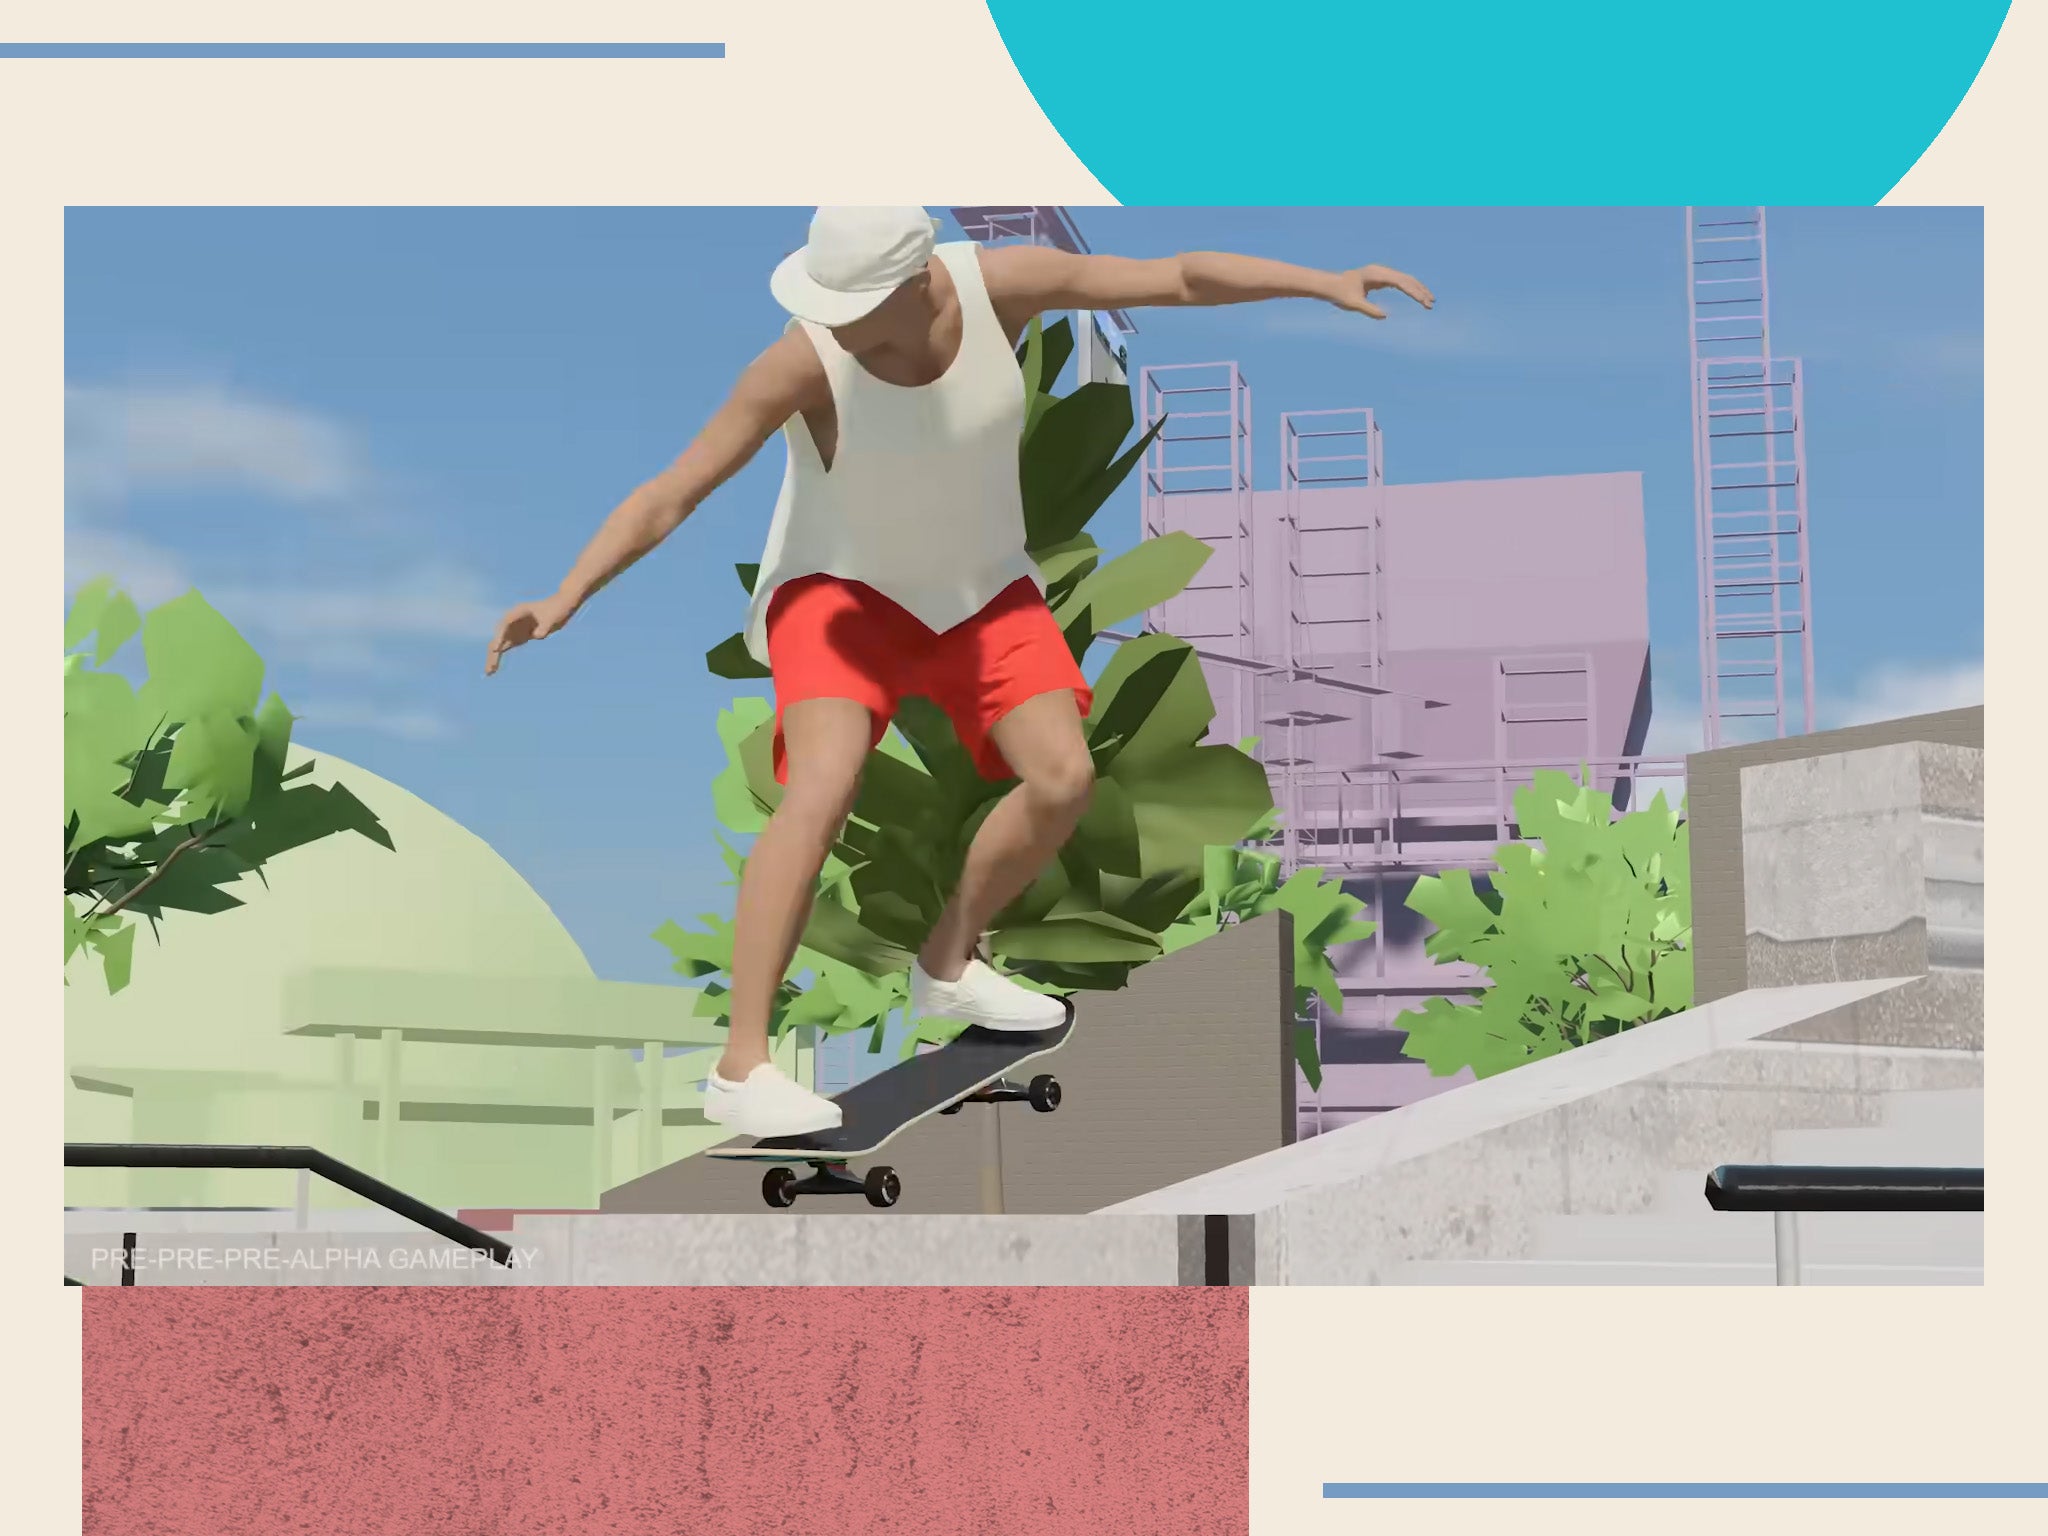 Skate 4 release date rumours, playtest, platforms, gameplay